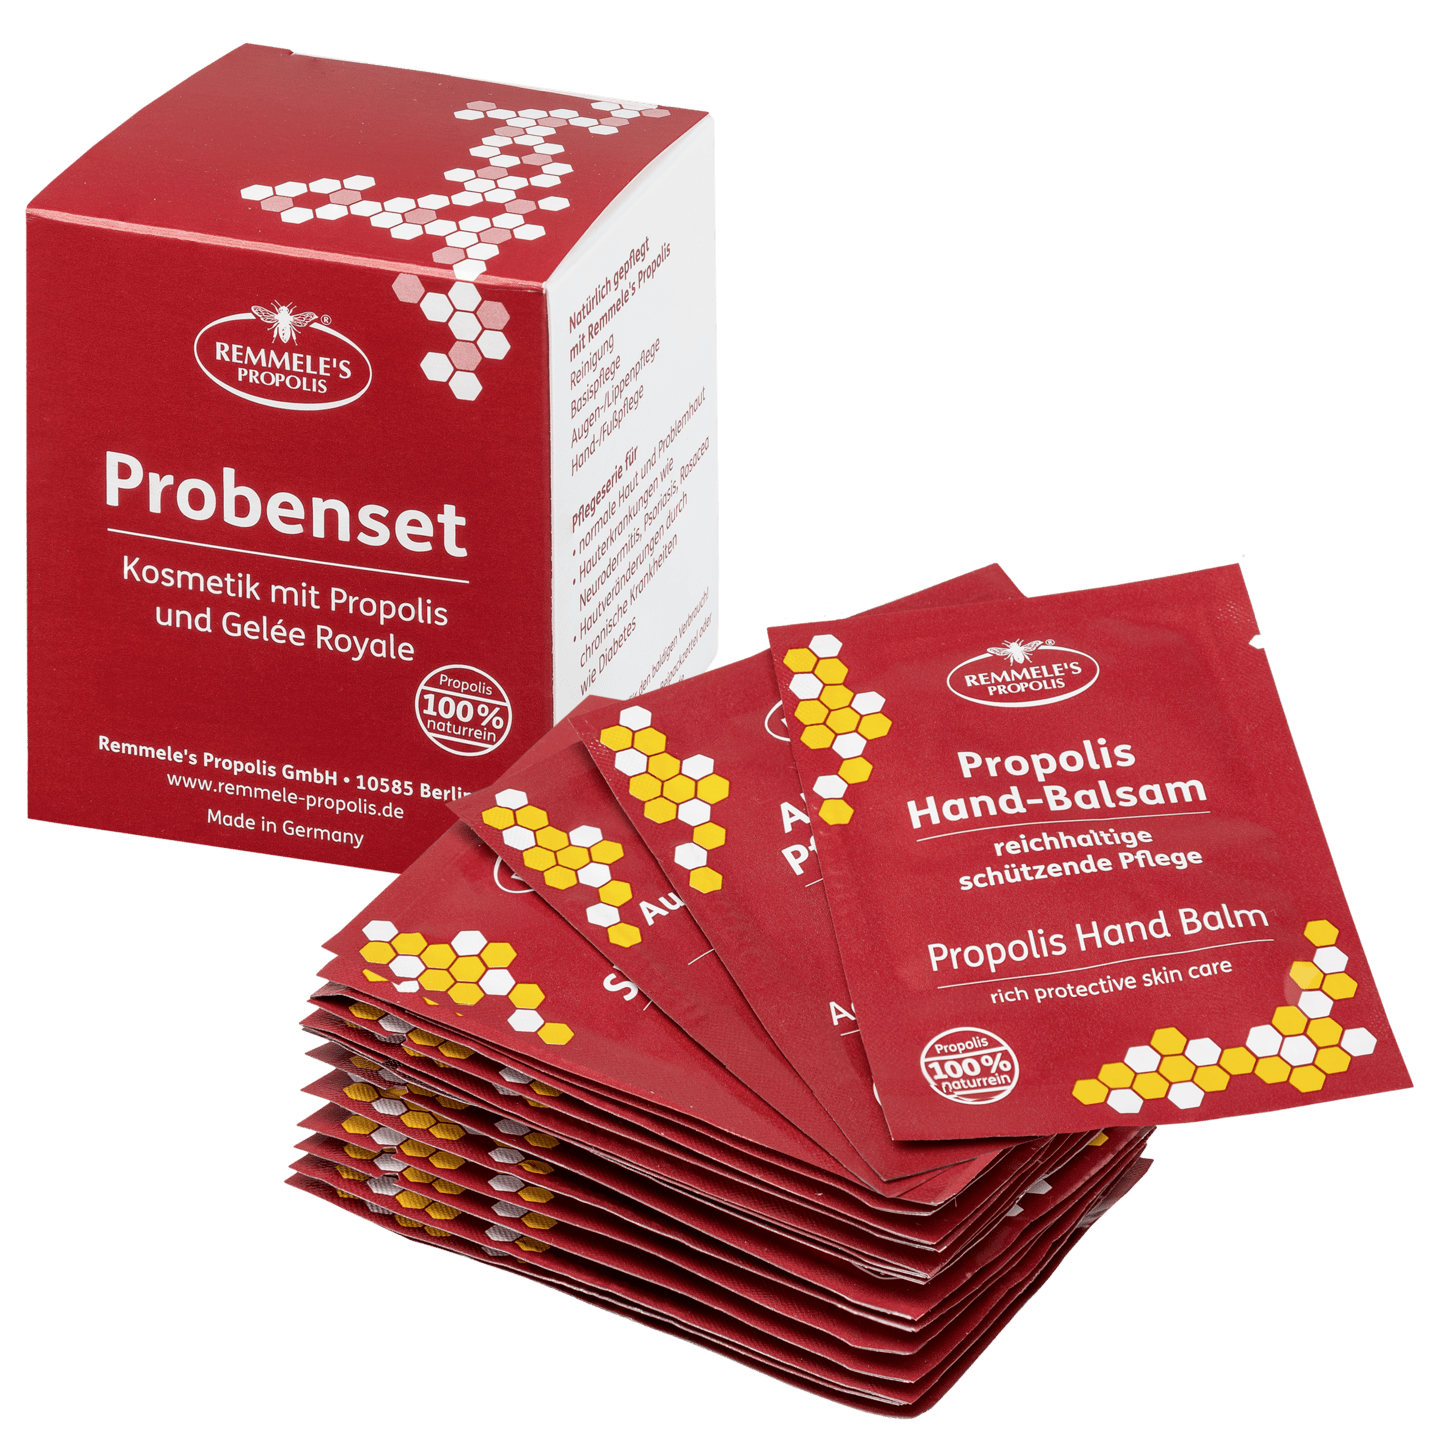 Remmele's Propolis - PROPOLIS Proben-Set